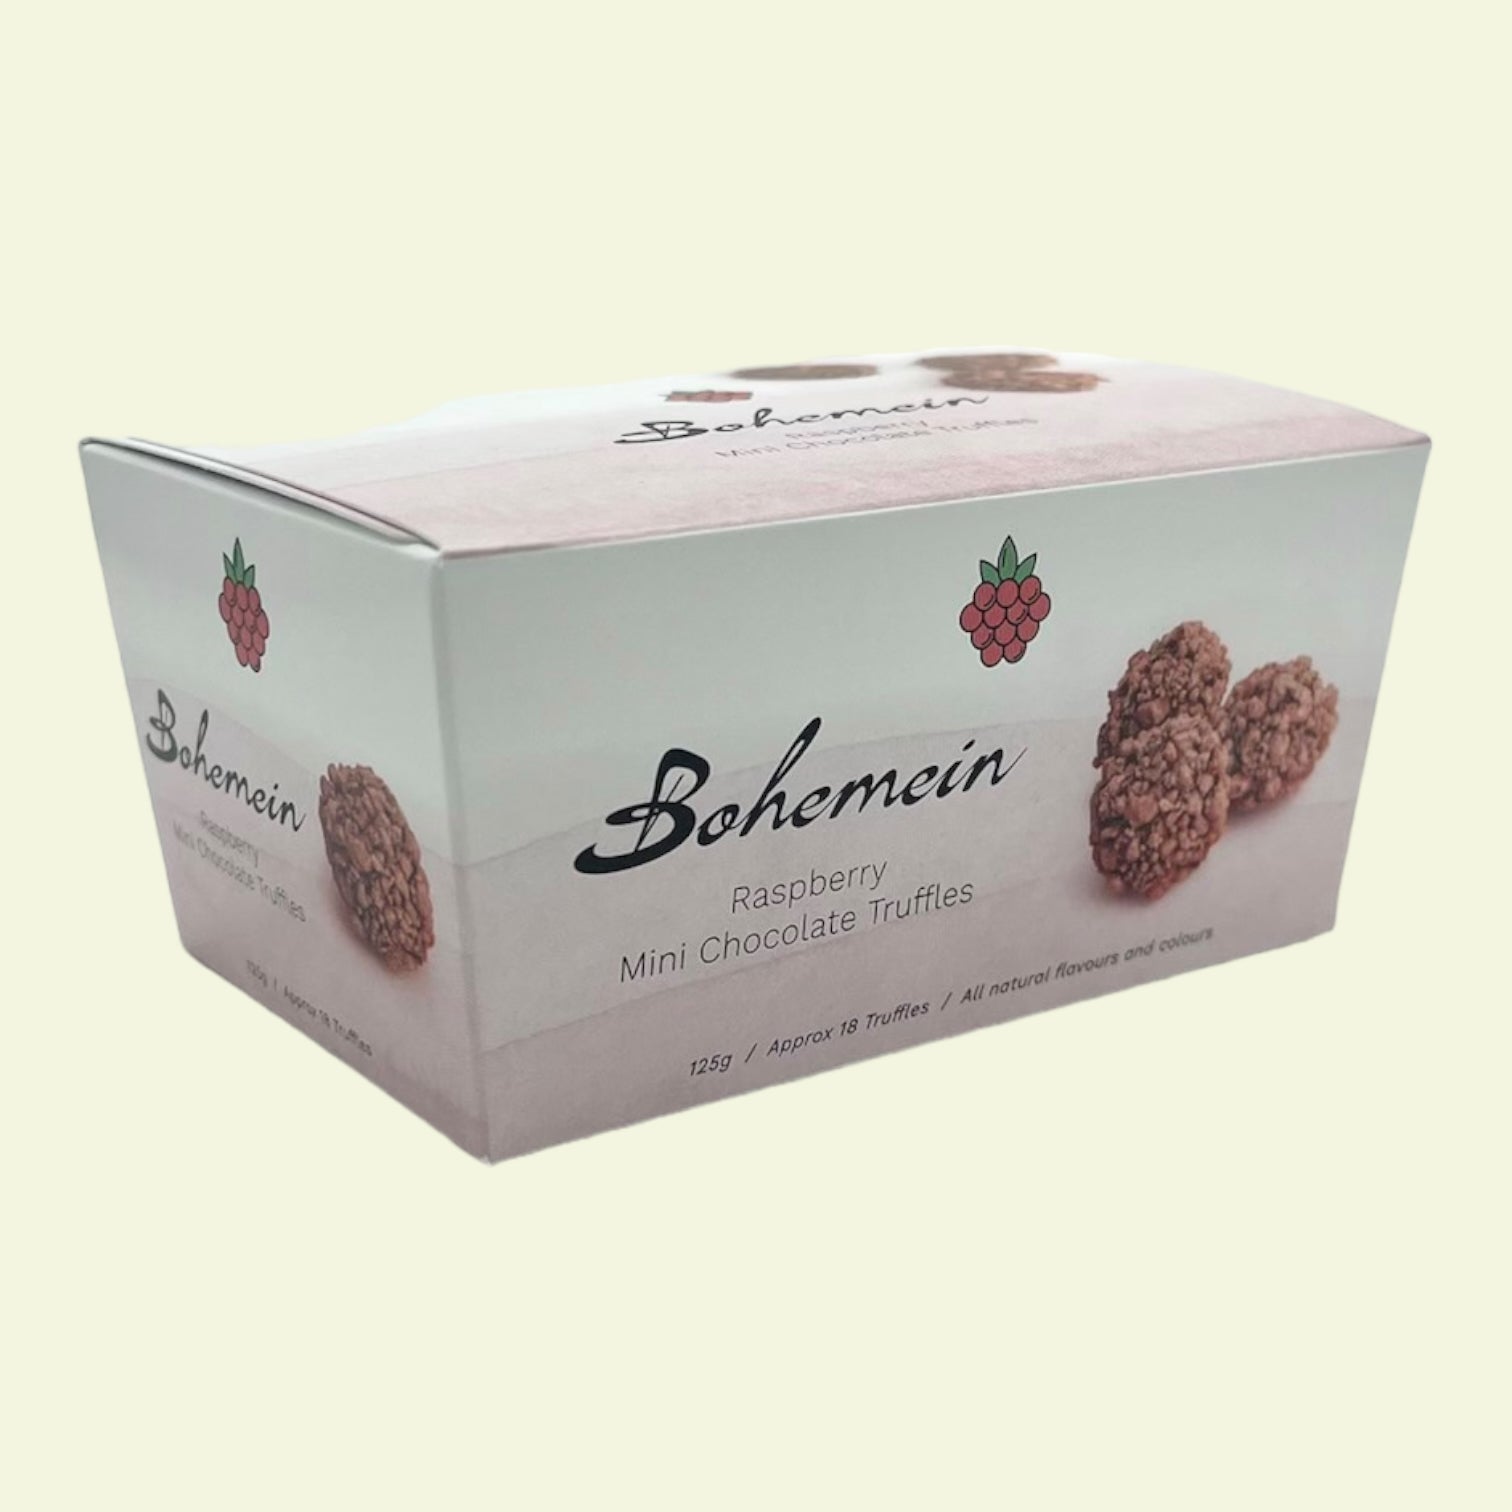 Bohemein Raspberry Chocolate Truffle Box